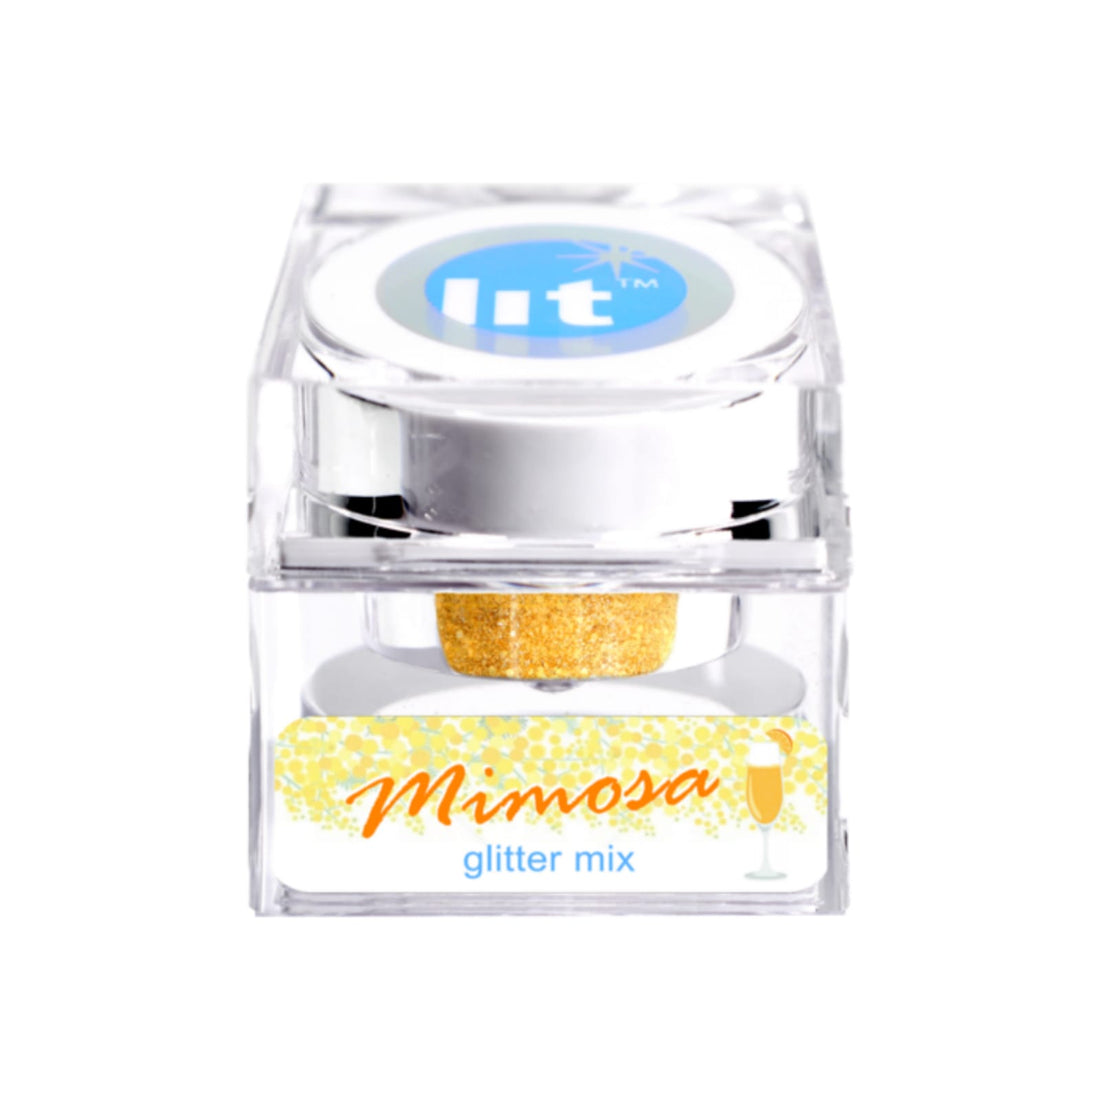 Lit Glitter Mimosa Glitter Mix 4g